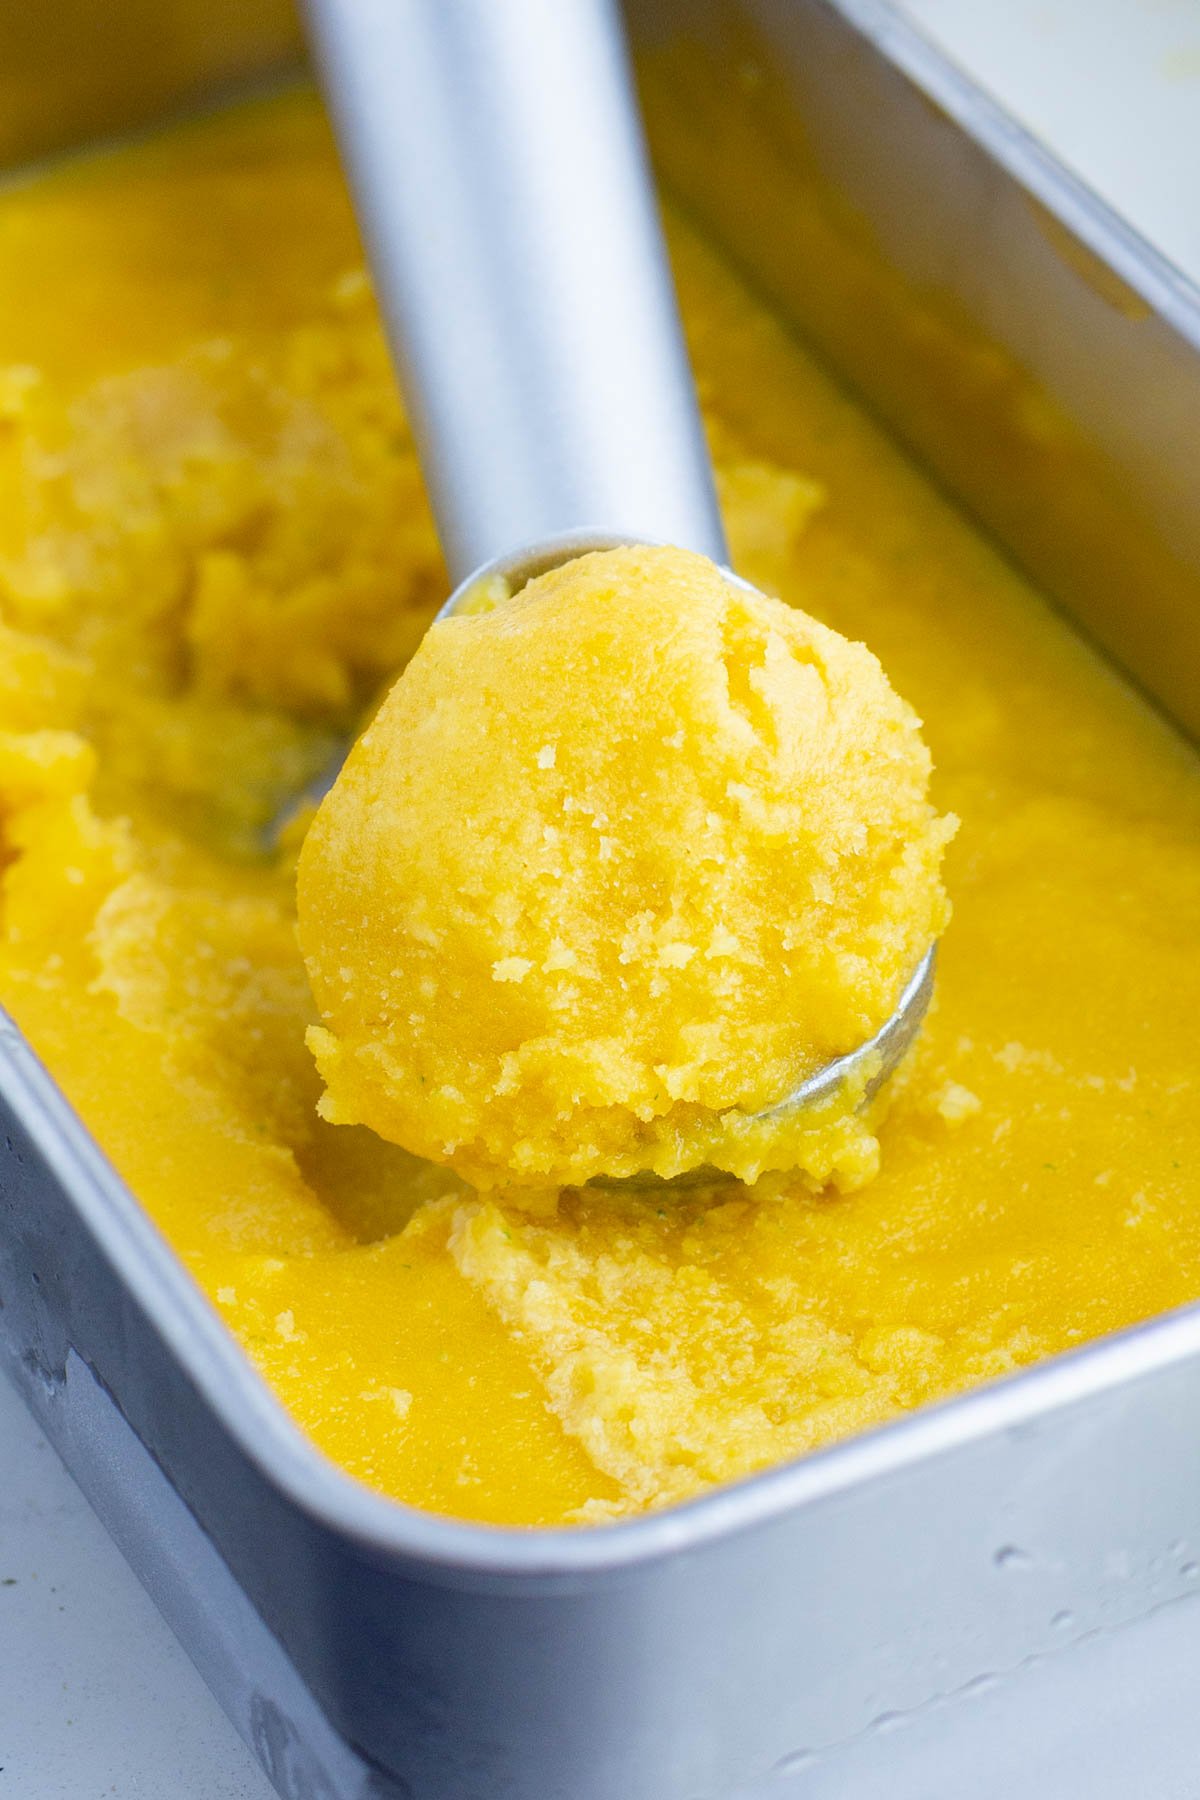 An ice cream scoop serves up some mango sorbet.